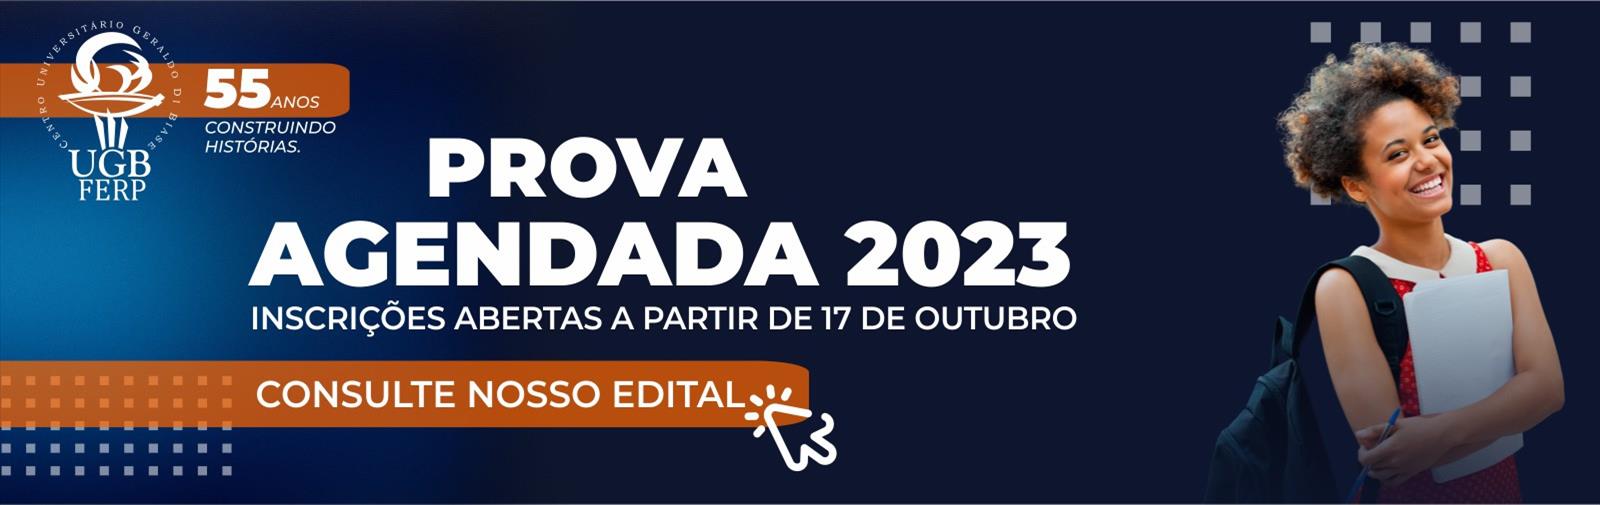 PROVA AGENDADA 2023